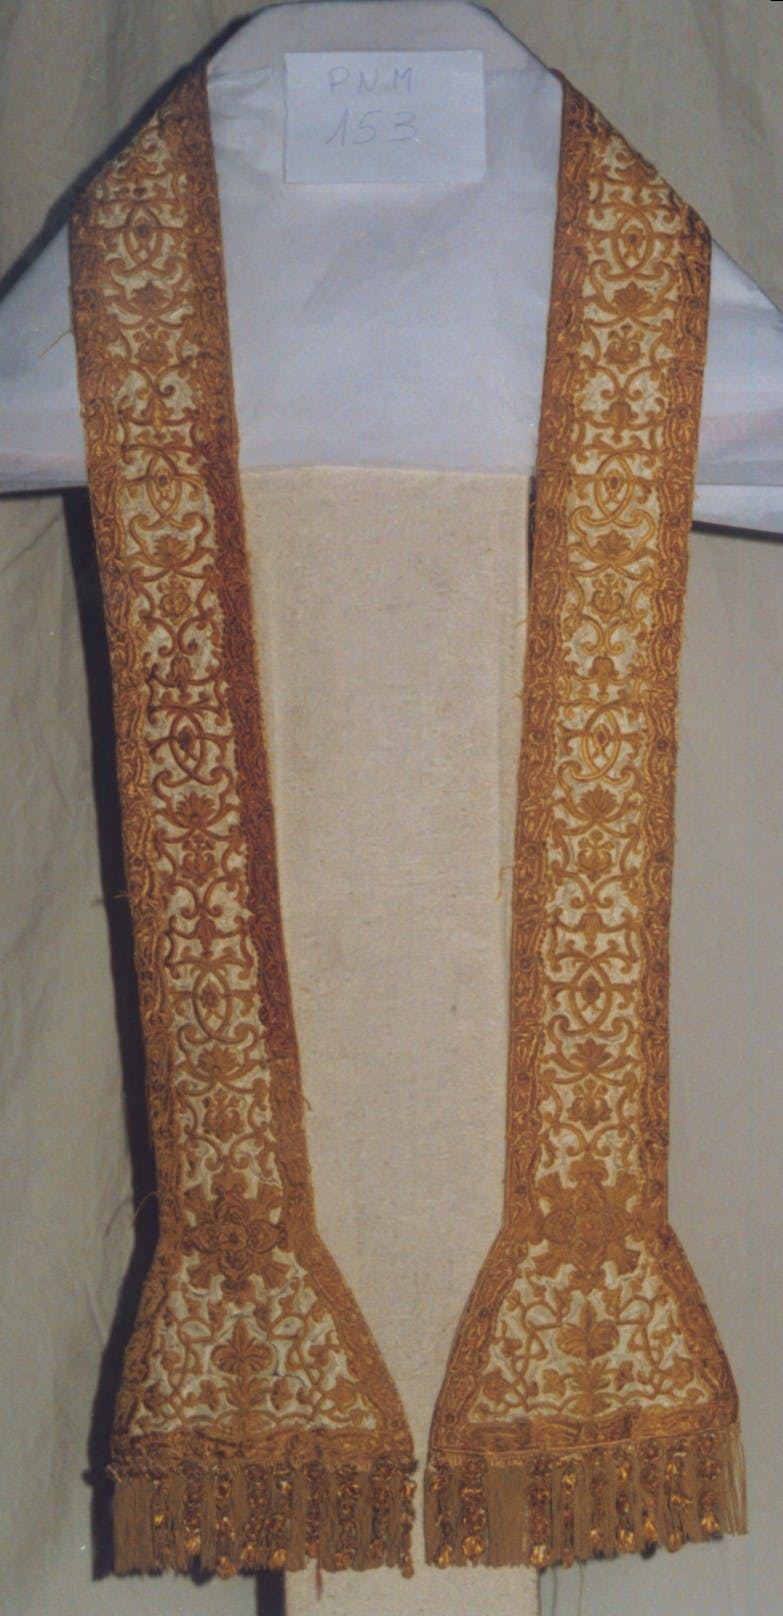 Vestimenta de la primera mitad del siglo XVIII